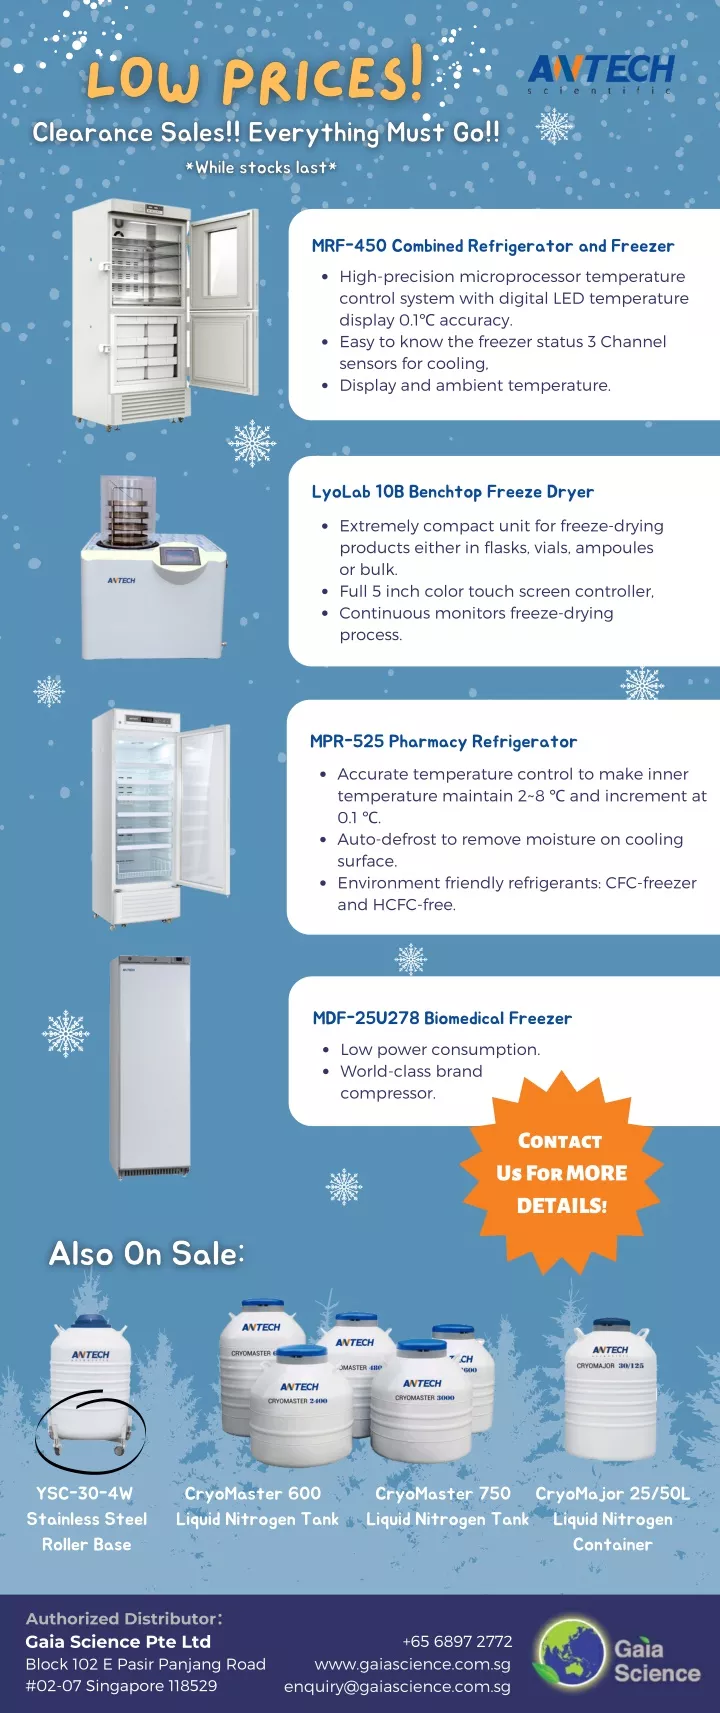 mrf 450 combined refrigerator and freezer